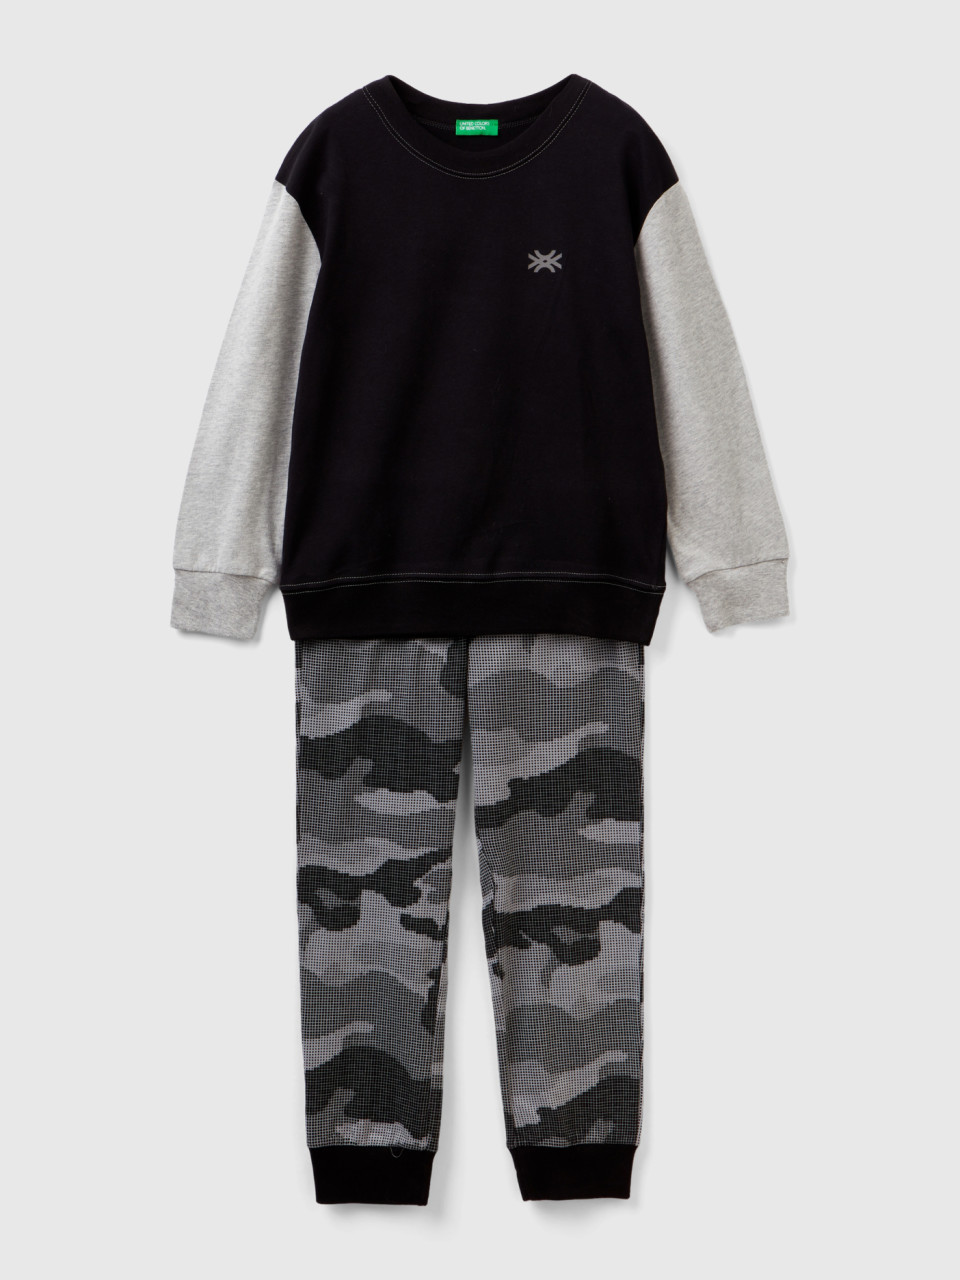 Benetton, Pyjamas With Camouflage Bottoms, Black, Kids